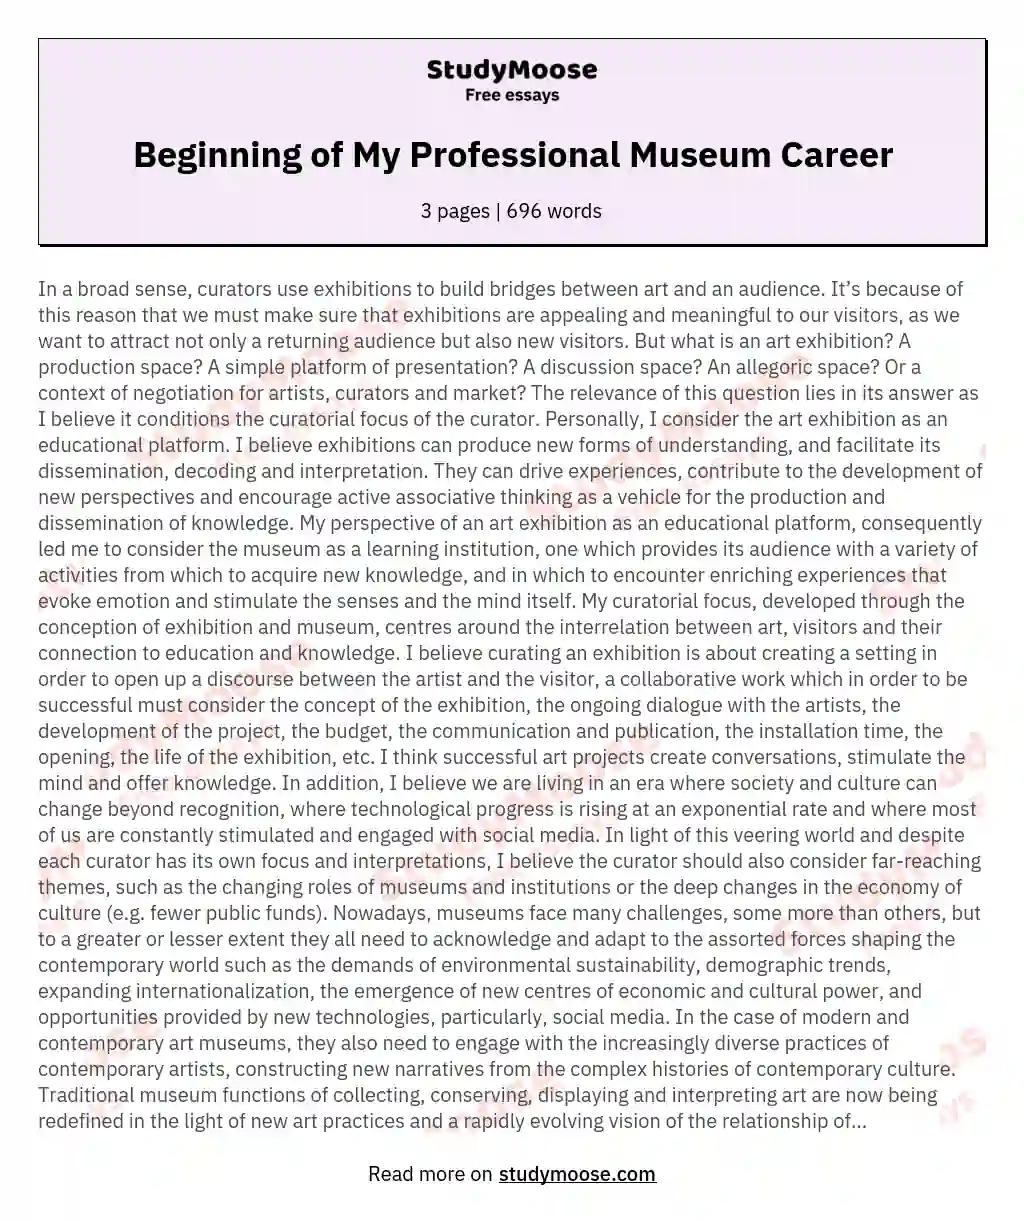 Beginning of My Professional Museum Career